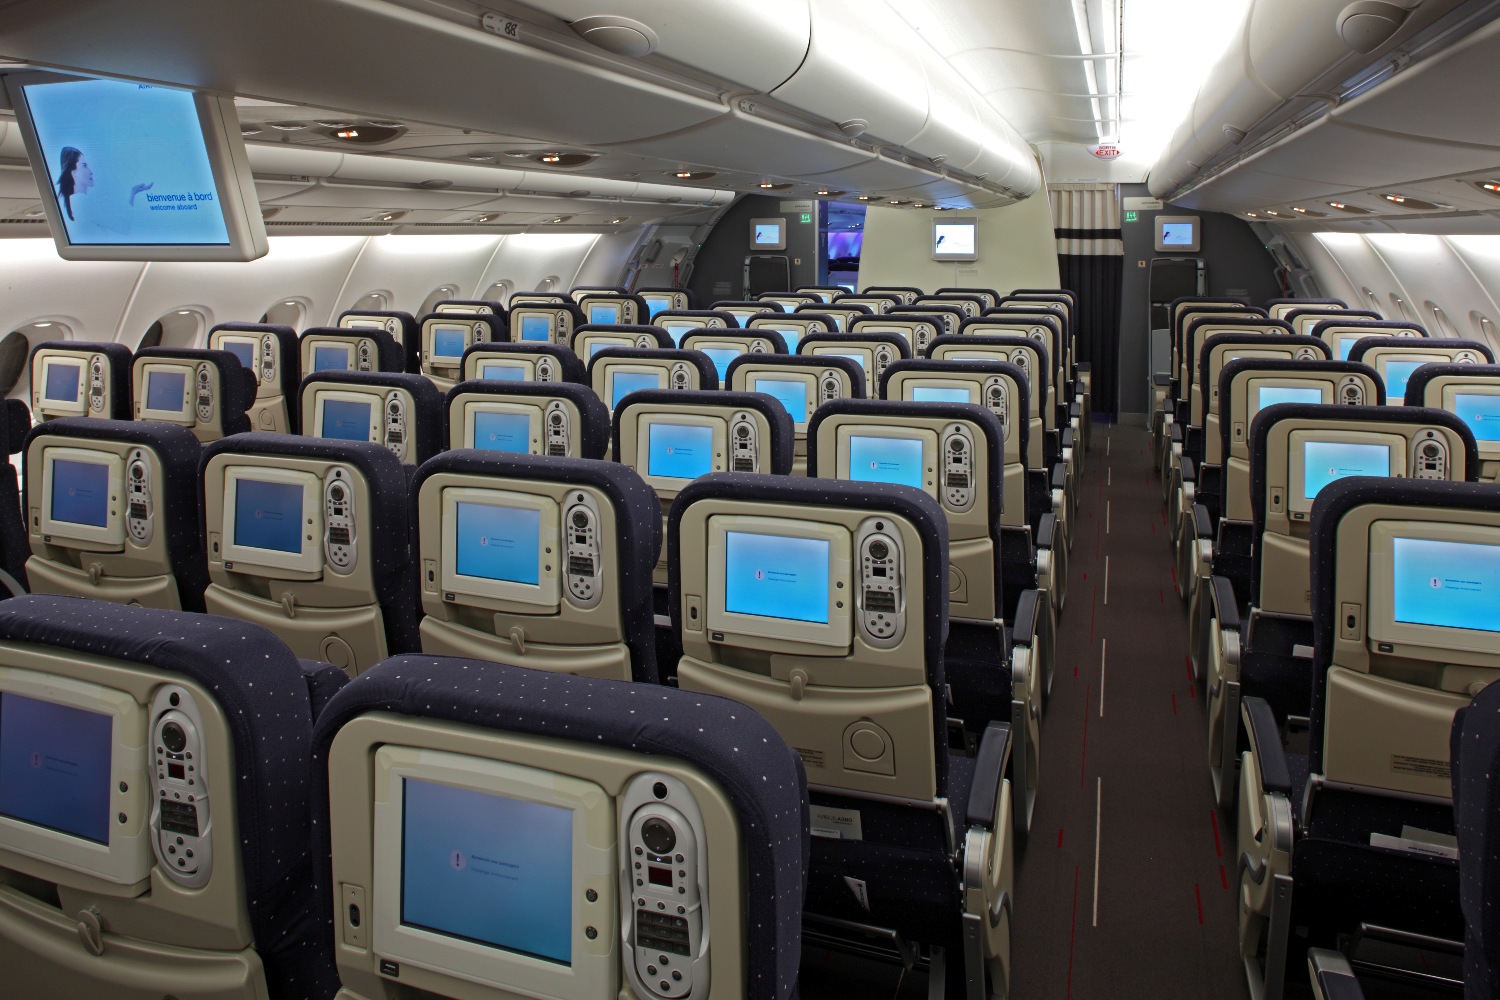 Airbus A380 Widescreen Wallpaper: Airbus A380 Economy Cabin Interior